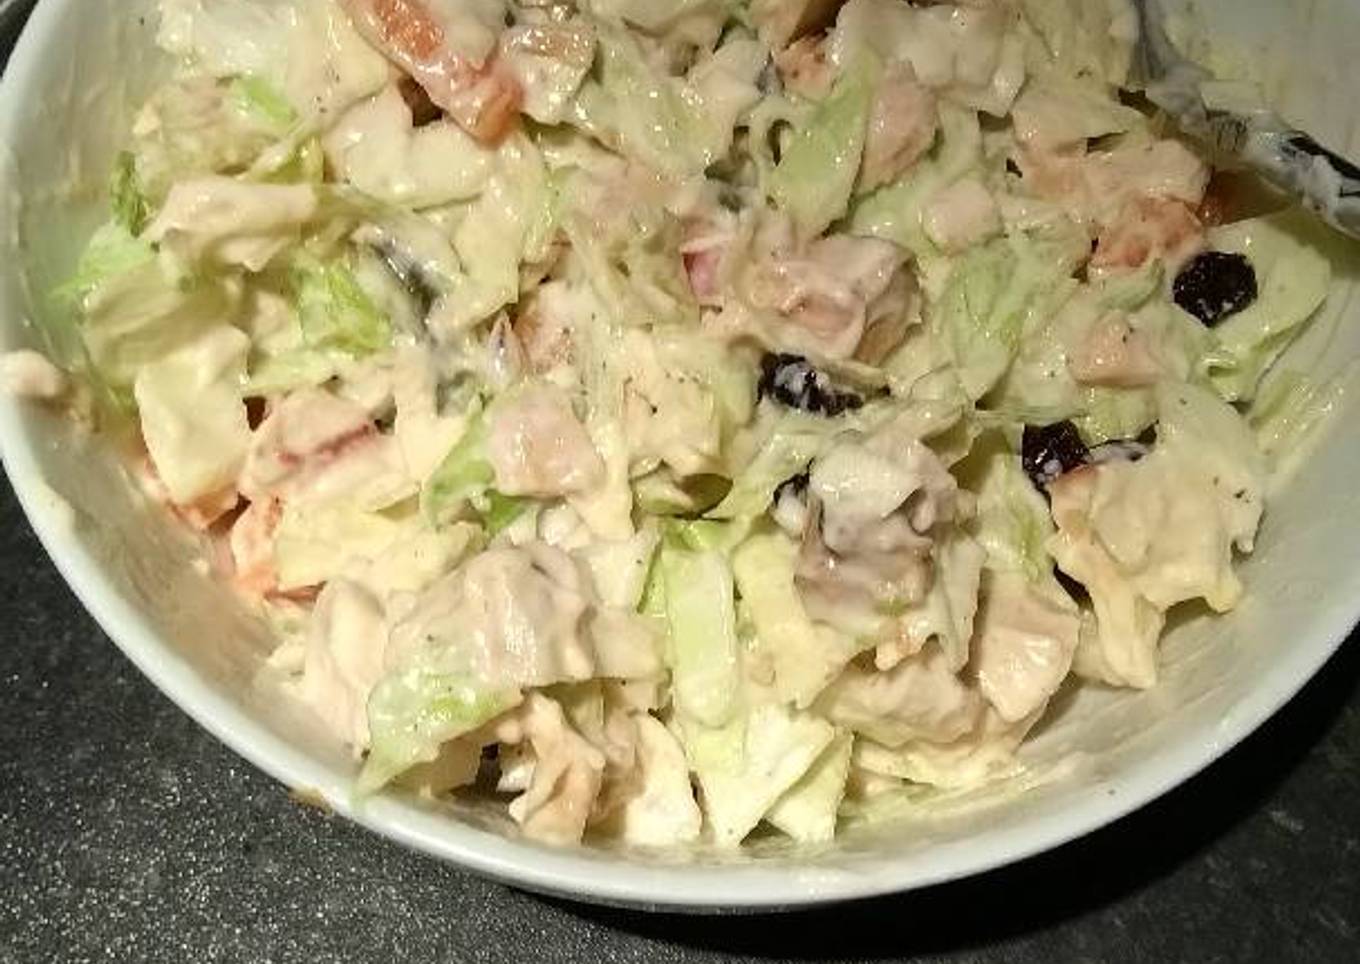 Creamy chicken salad/slaw